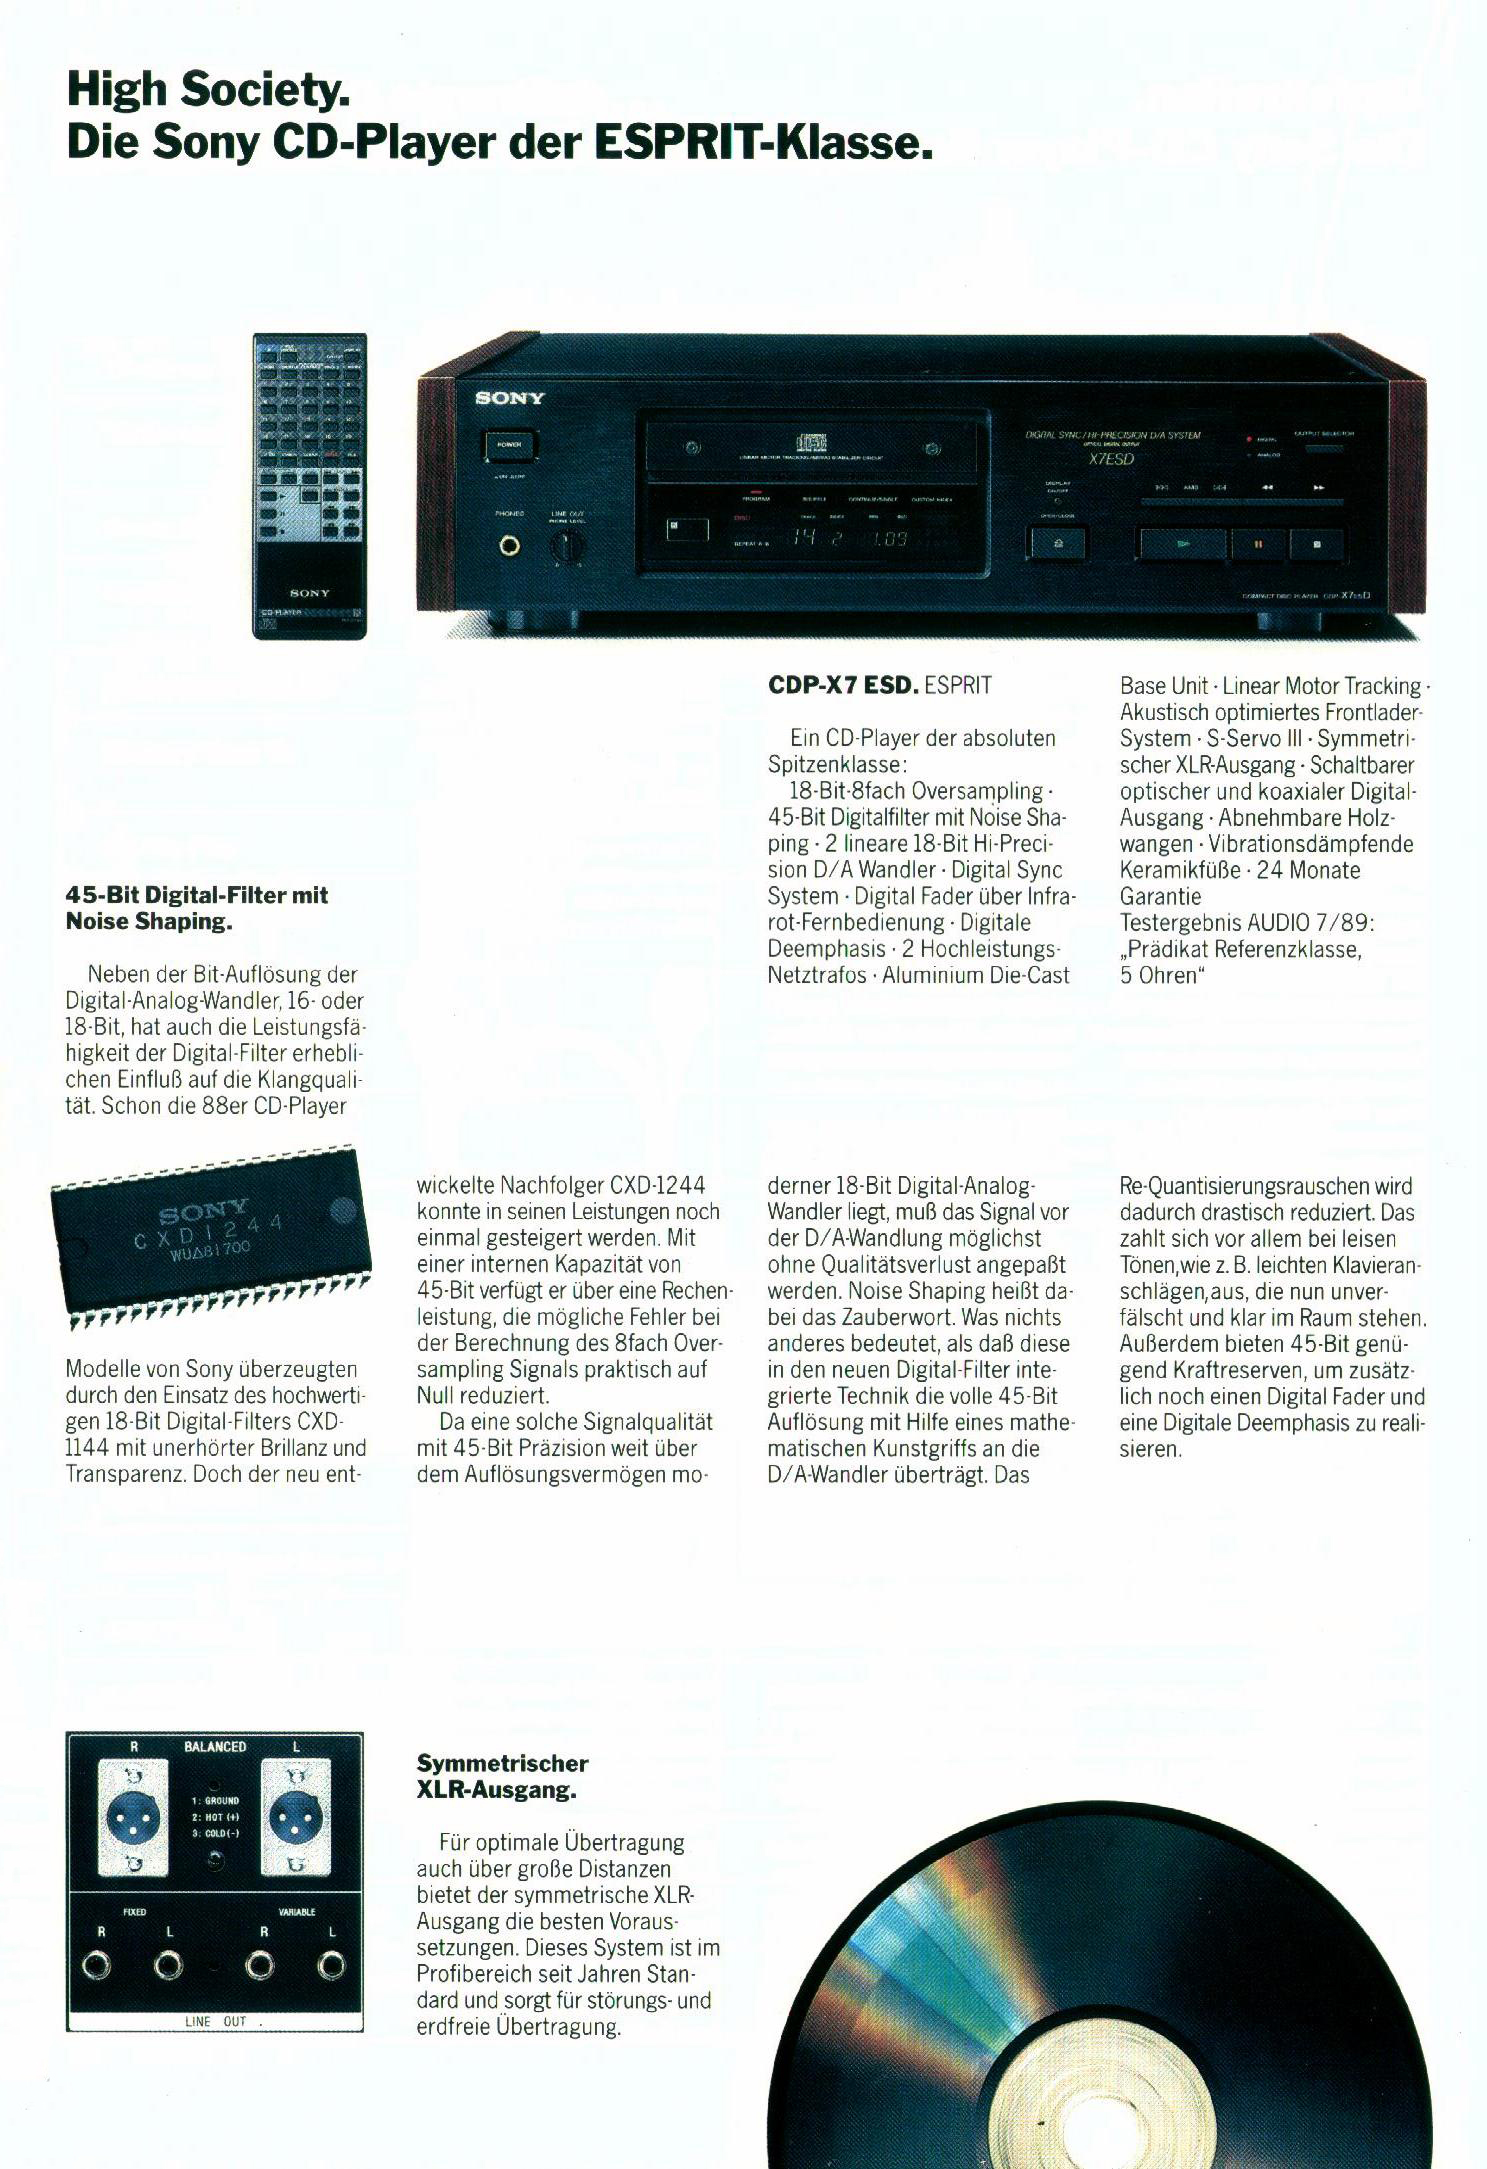 Sony CDP-X 7 ESD-Prospekt-1989.jpg